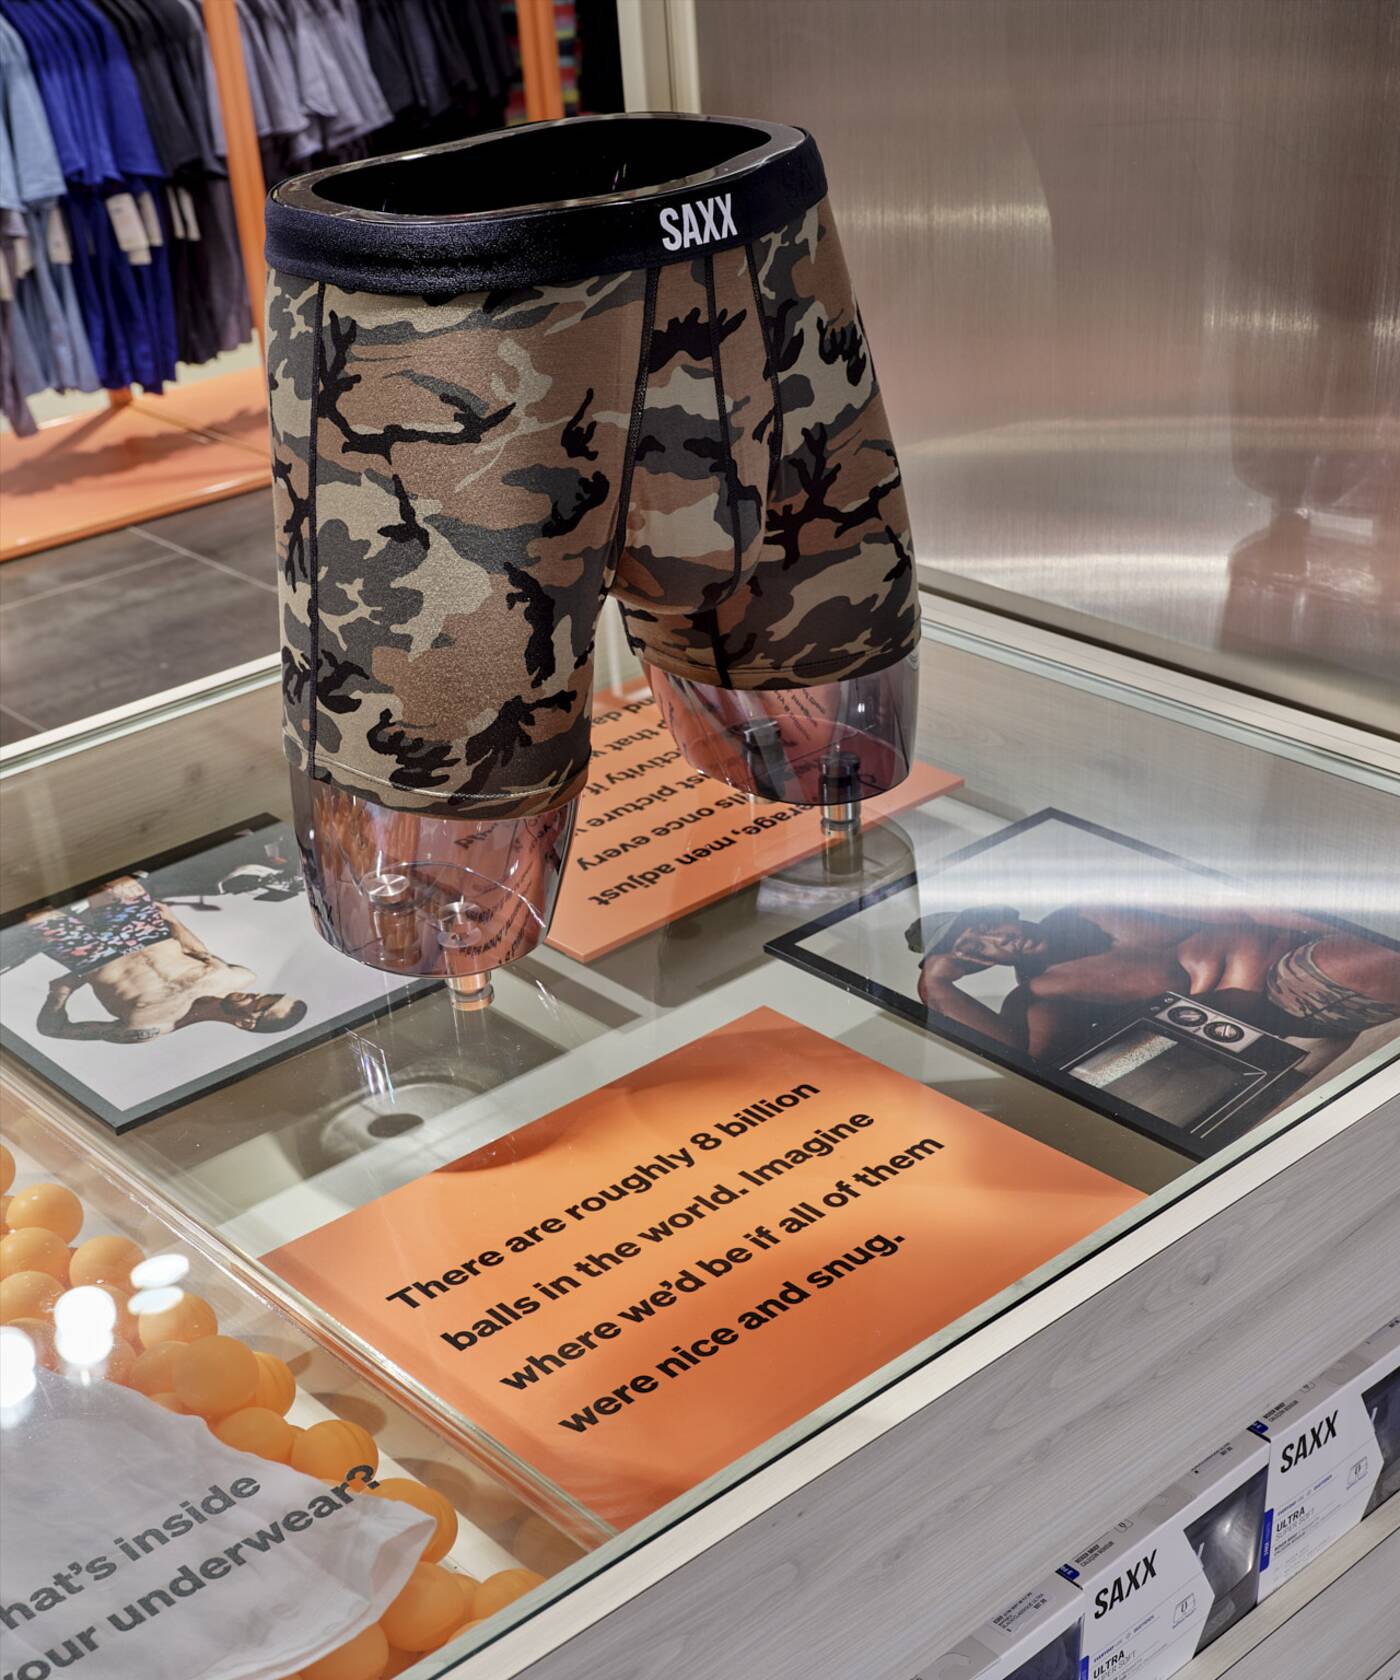 SAXX Underwear launches first immersive store in Toronto